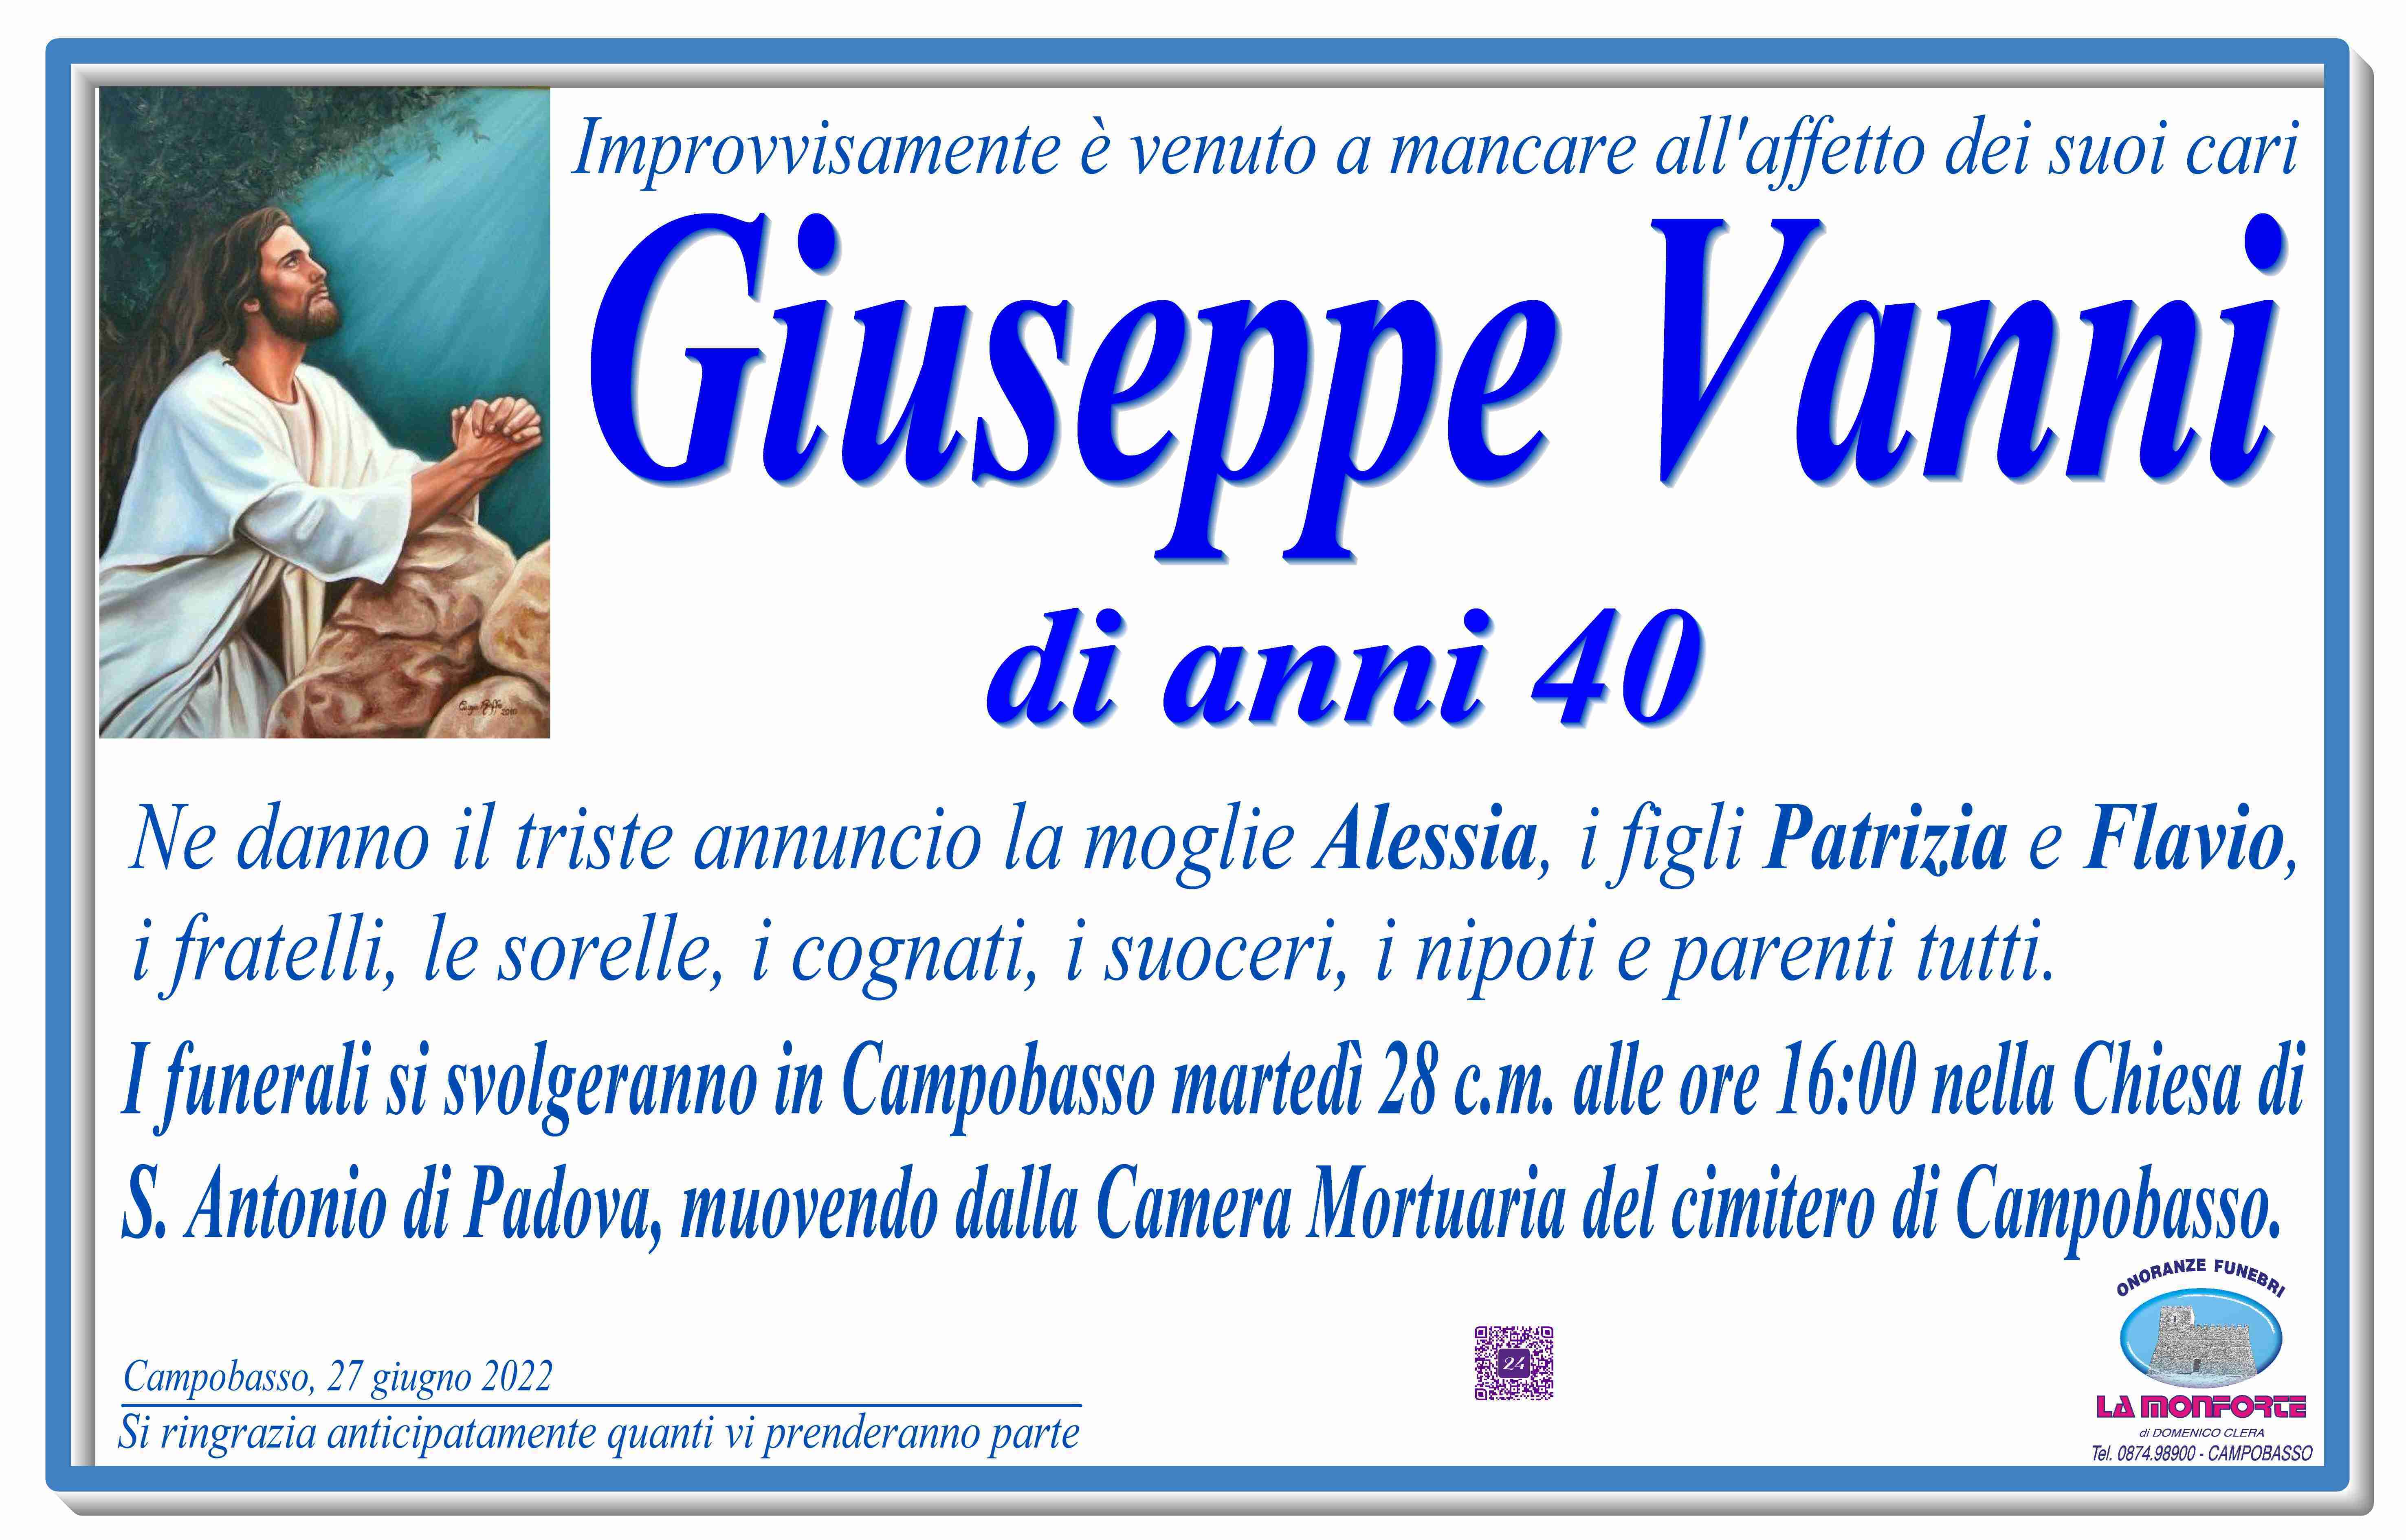 Giuseppe Vanni